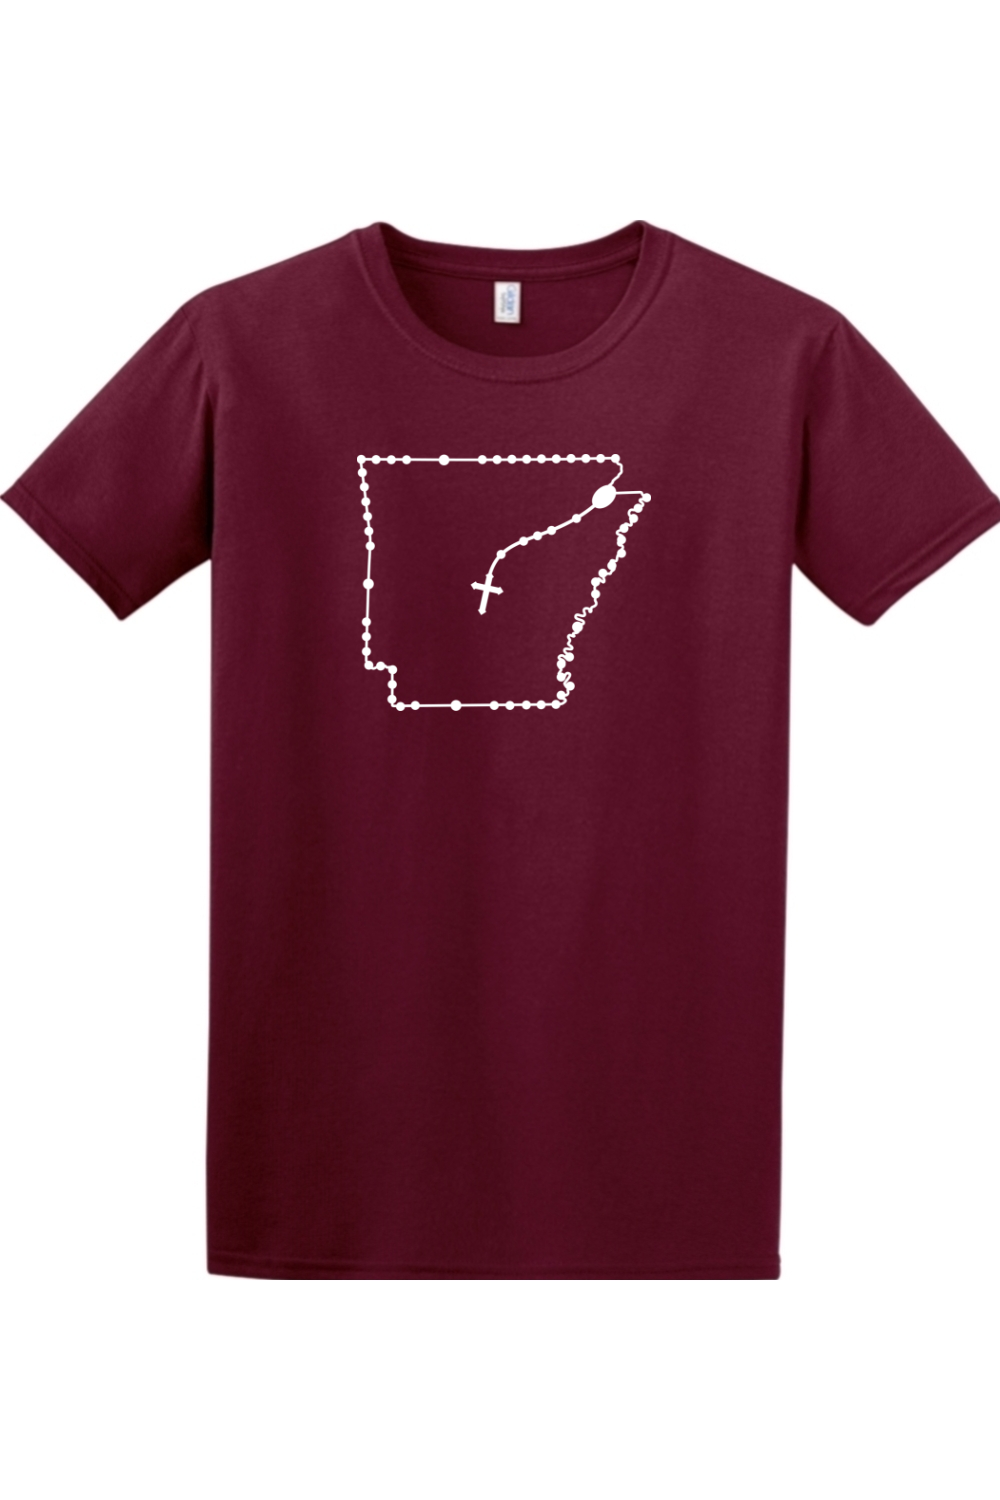 Arkansas Rosary Adult T-shirt